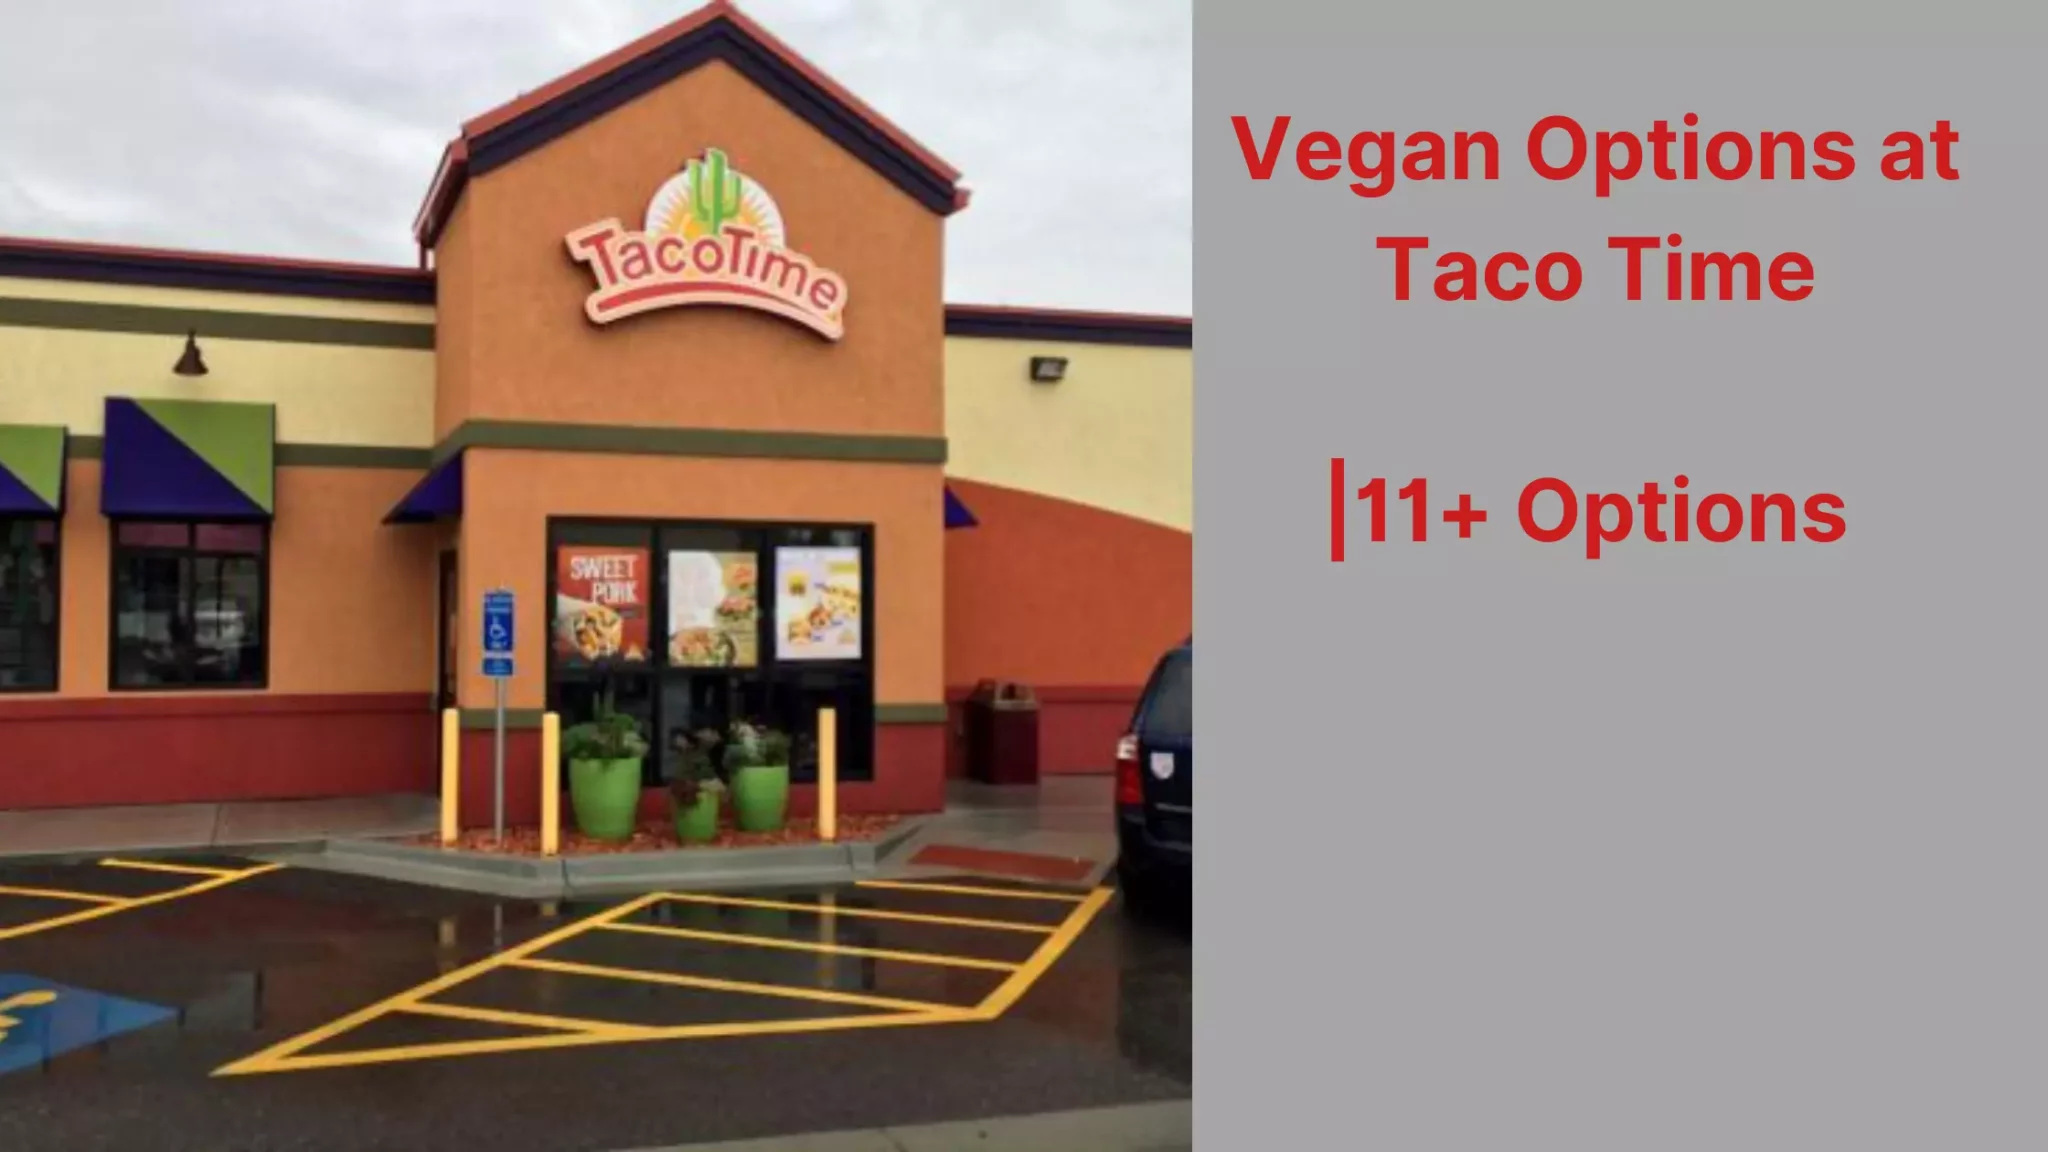 Vegan Options at Taco Time